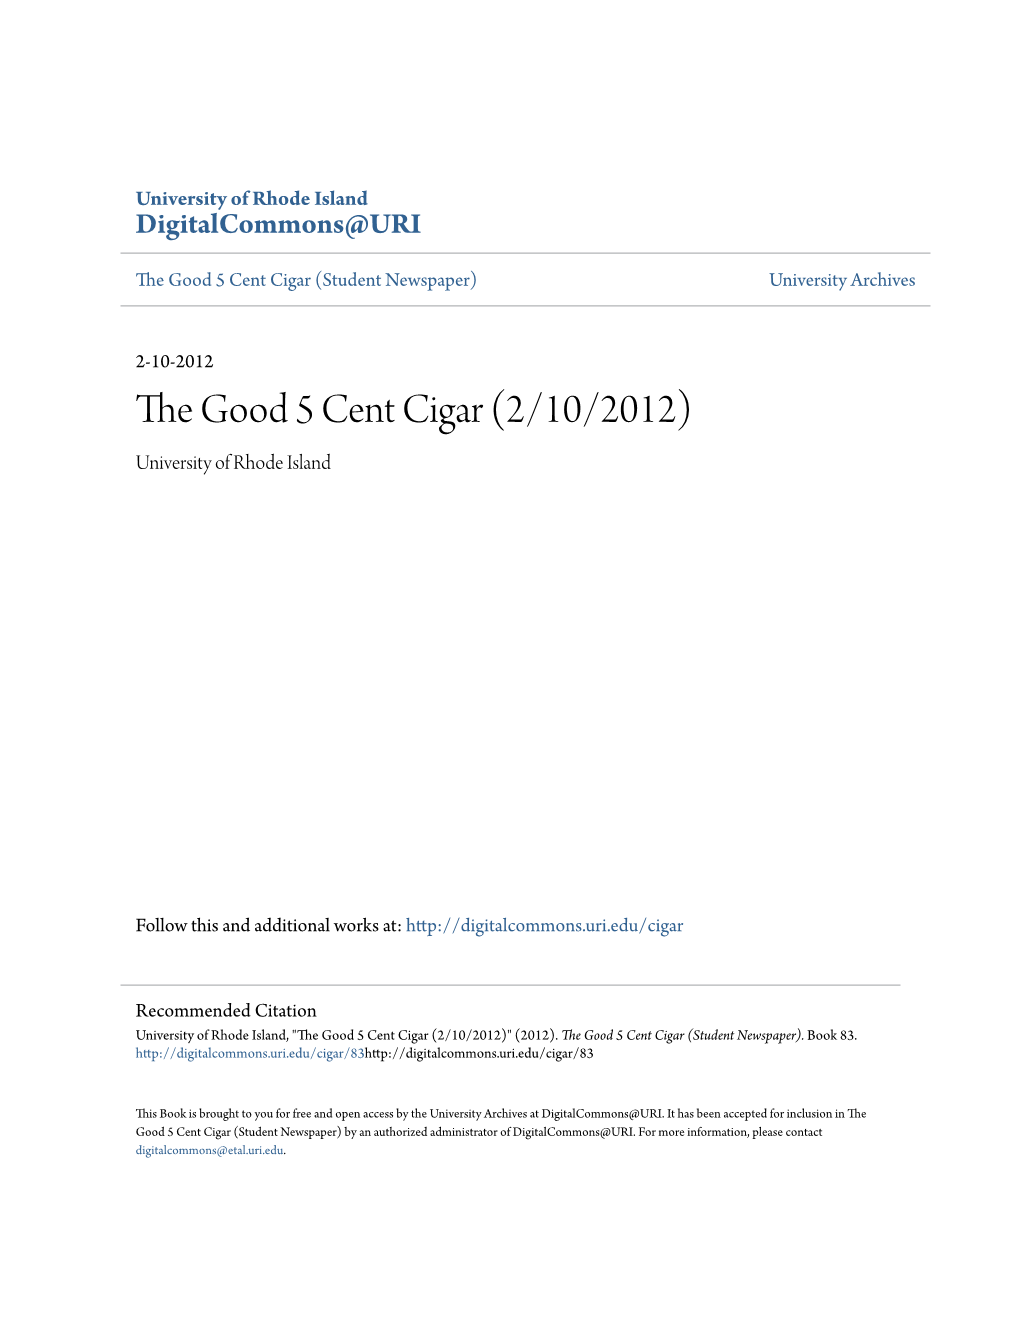 The Good 5 Cent Cigar (2/10/2012) University of Rhode Island